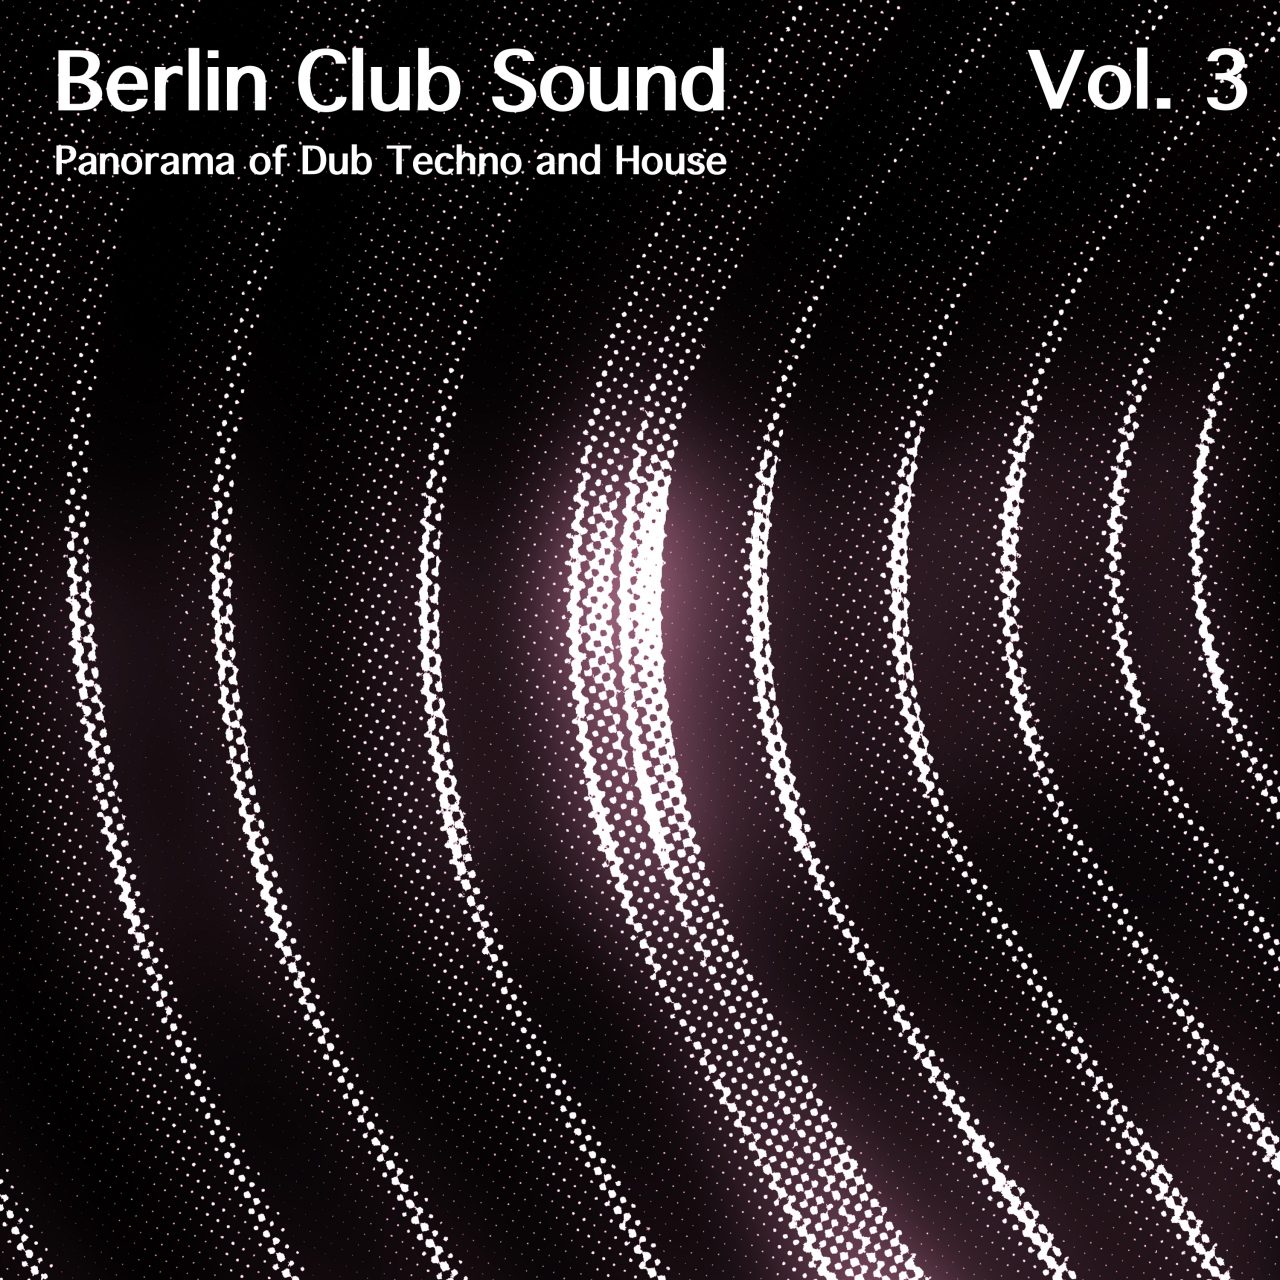 BERLIN CLUB SOUND, VOL. 3